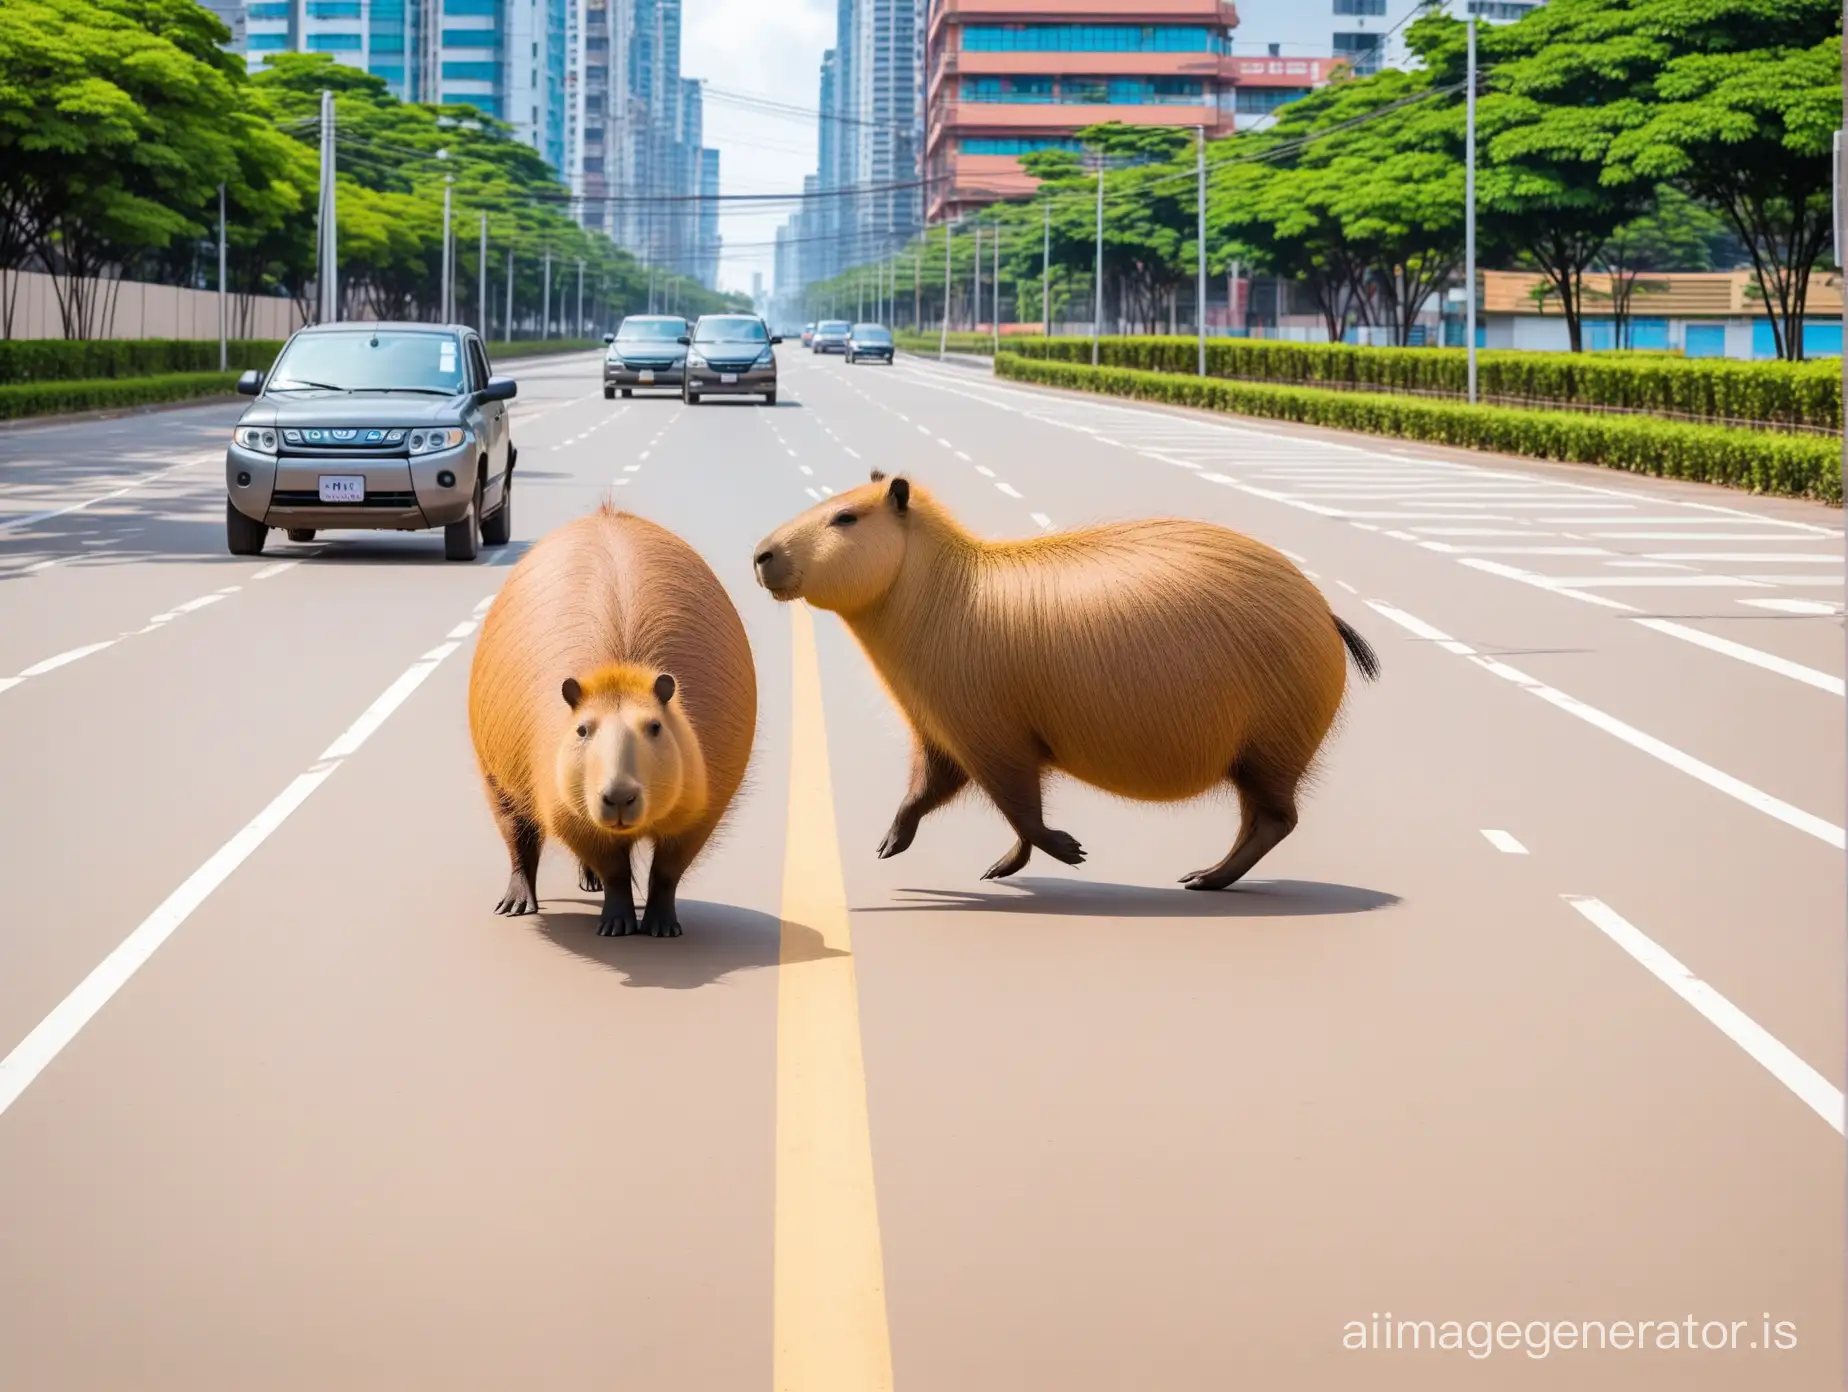 Urban-Encounter-Capybara-Crossing-a-City-Road